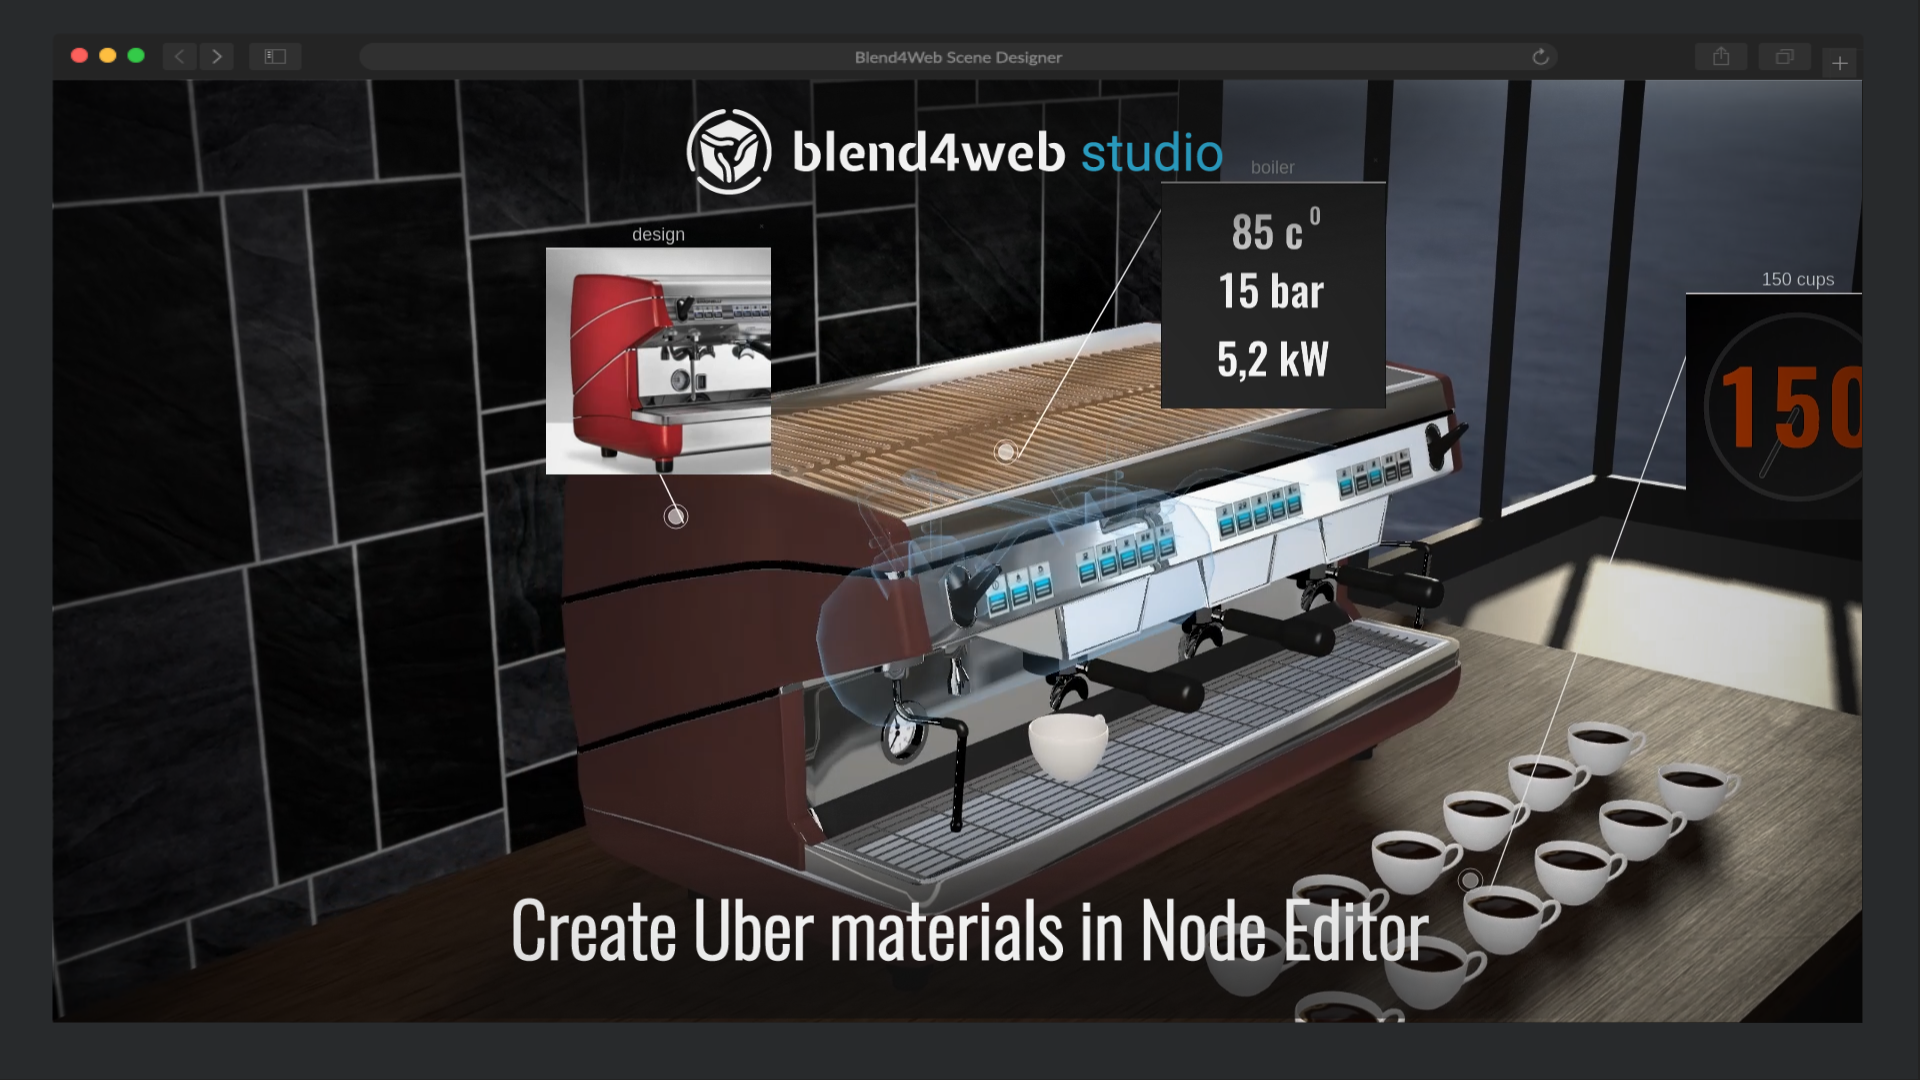 Blend4Web Studio: Create Uber materials in Node Editor